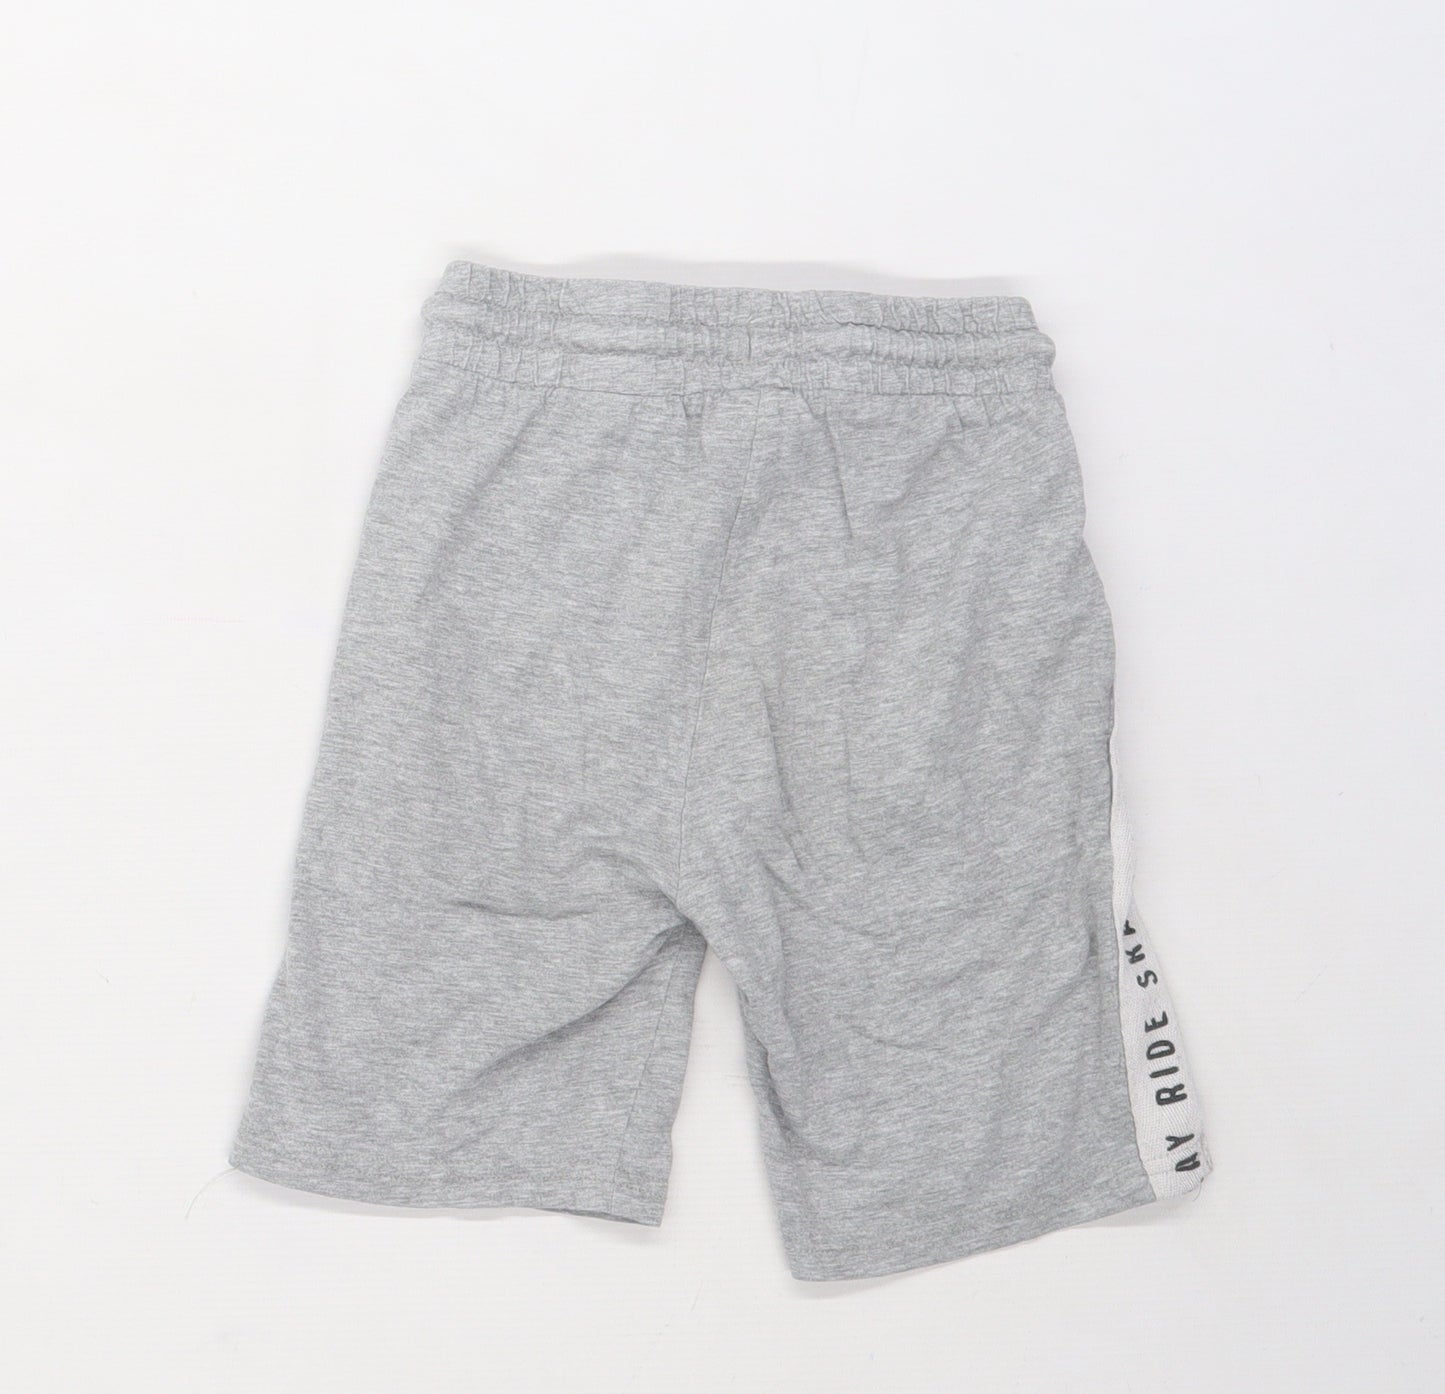 Zara Boys Grey   Sweat Shorts Size 8 Years